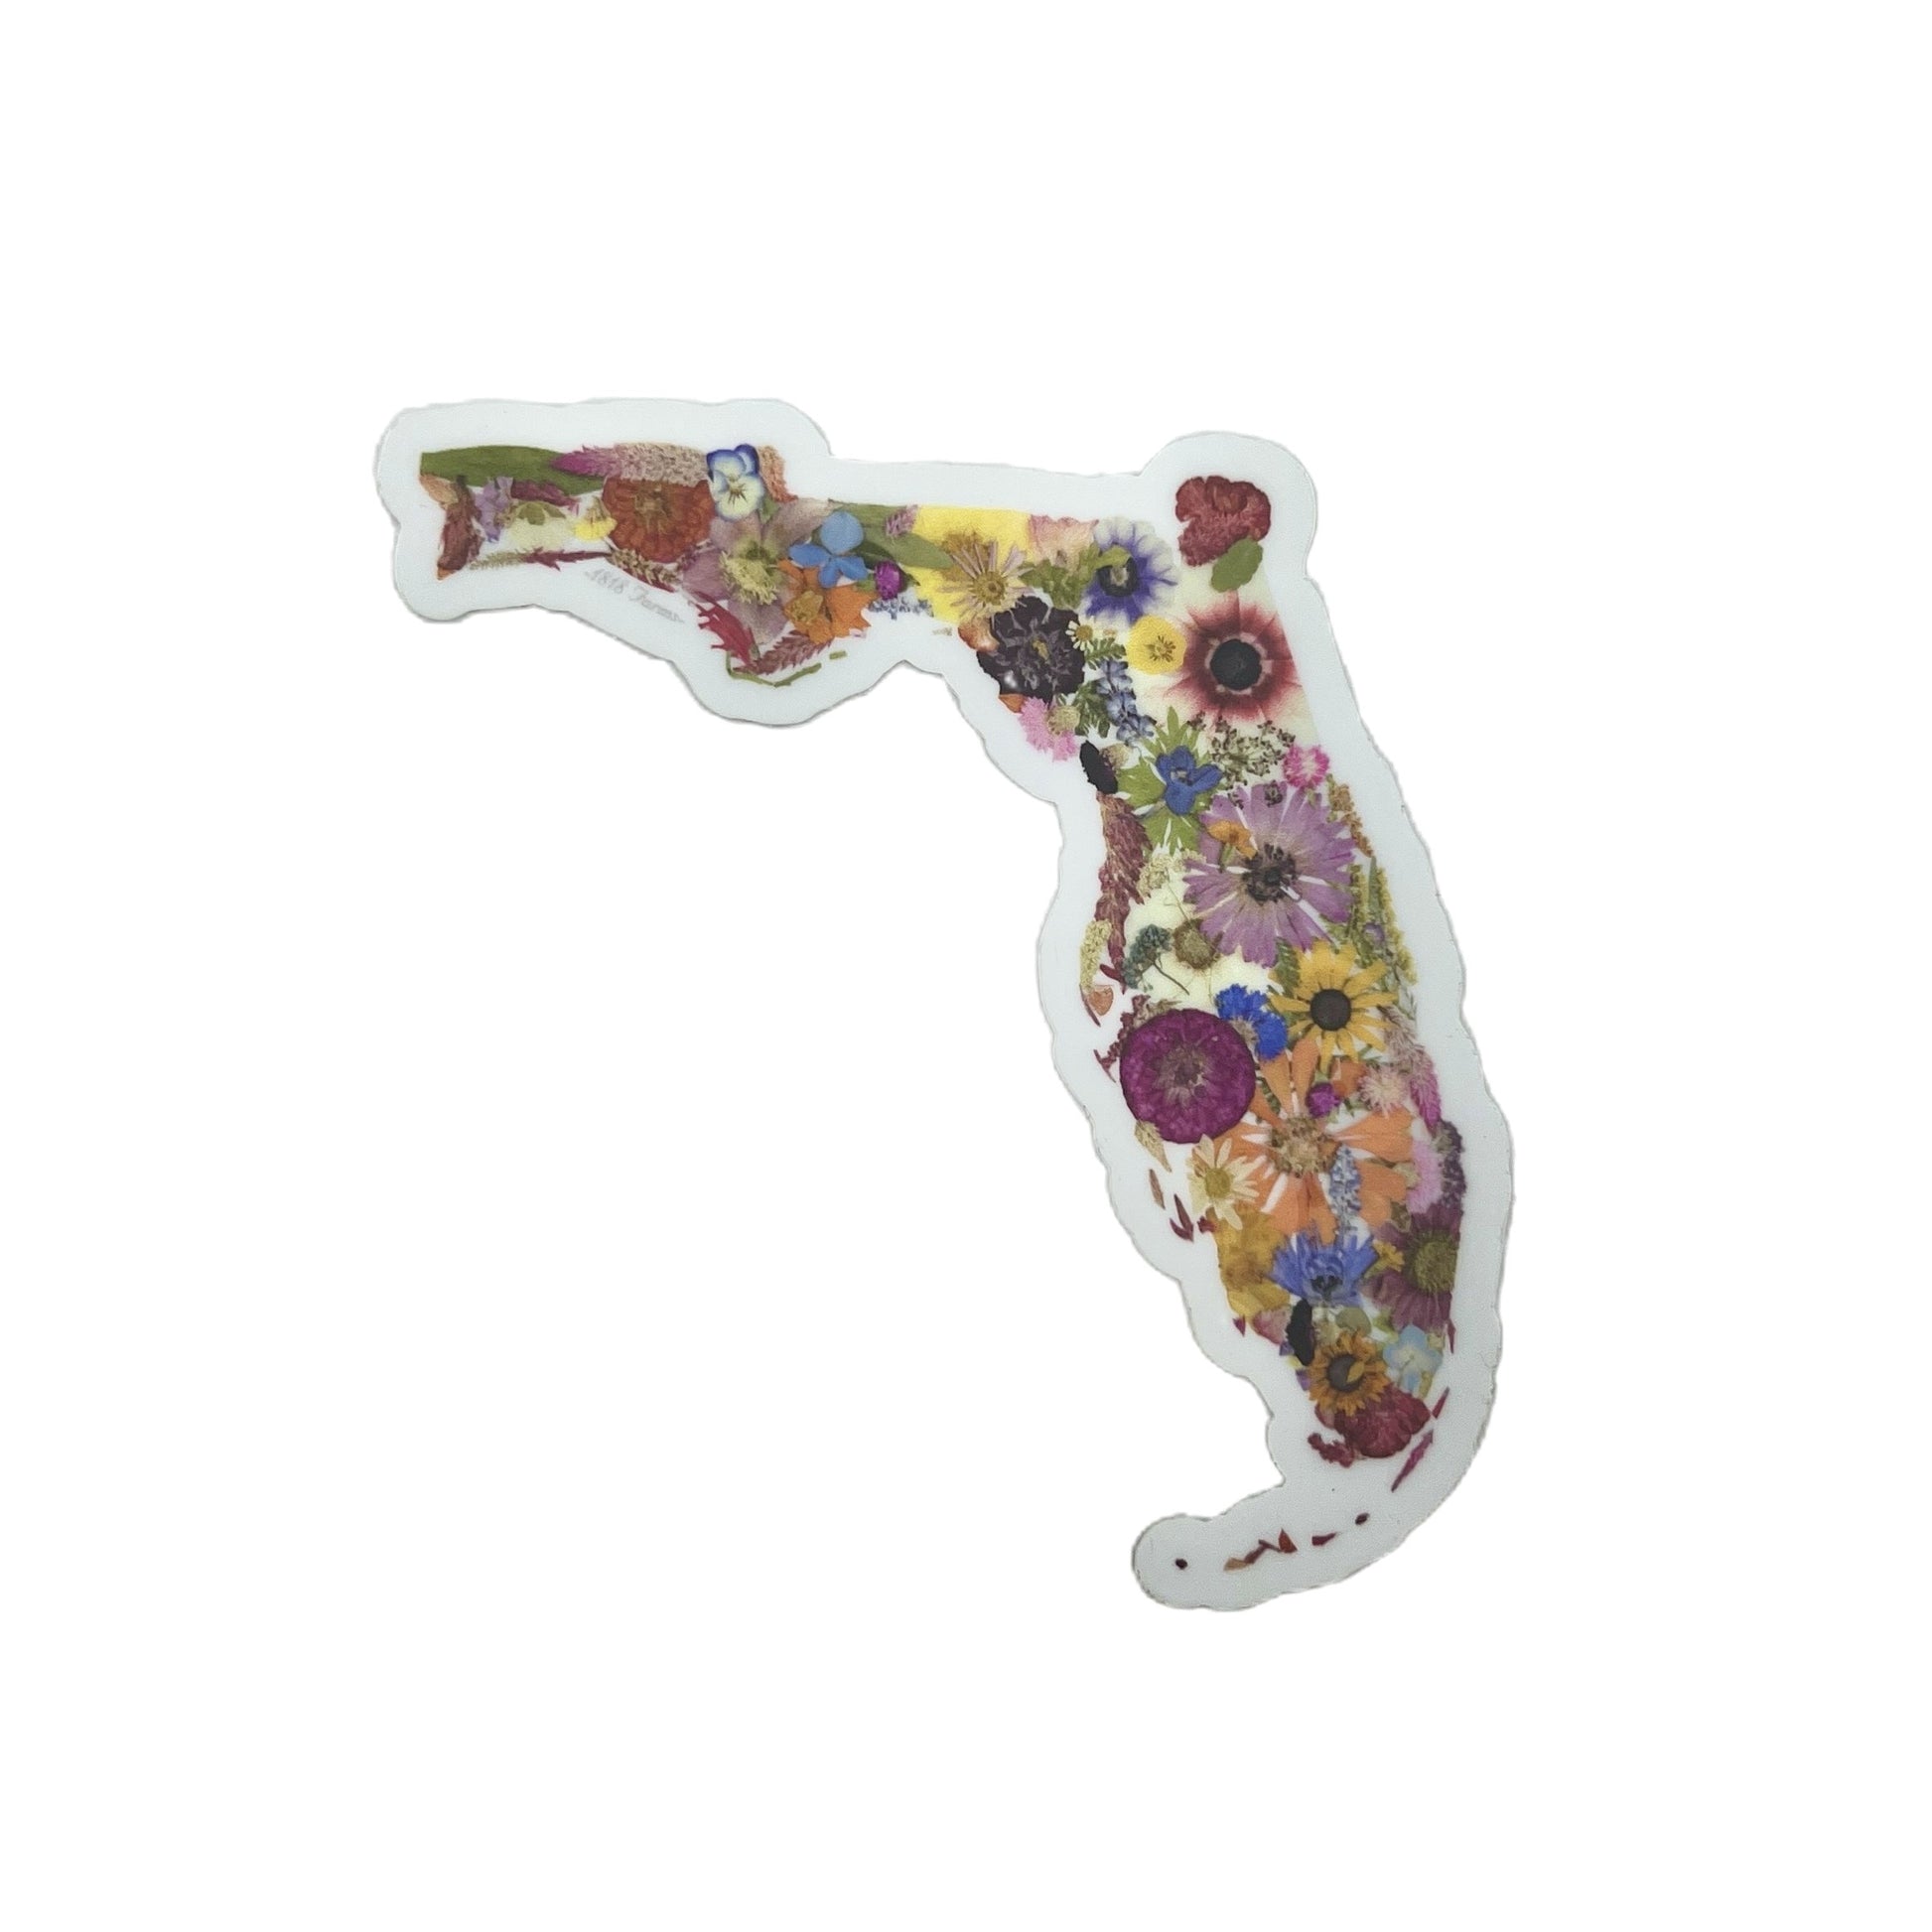 Florida Themed Vinyl Sticker  - "Where I Bloom" Collection Vinyl Sticker 1818 Farms   